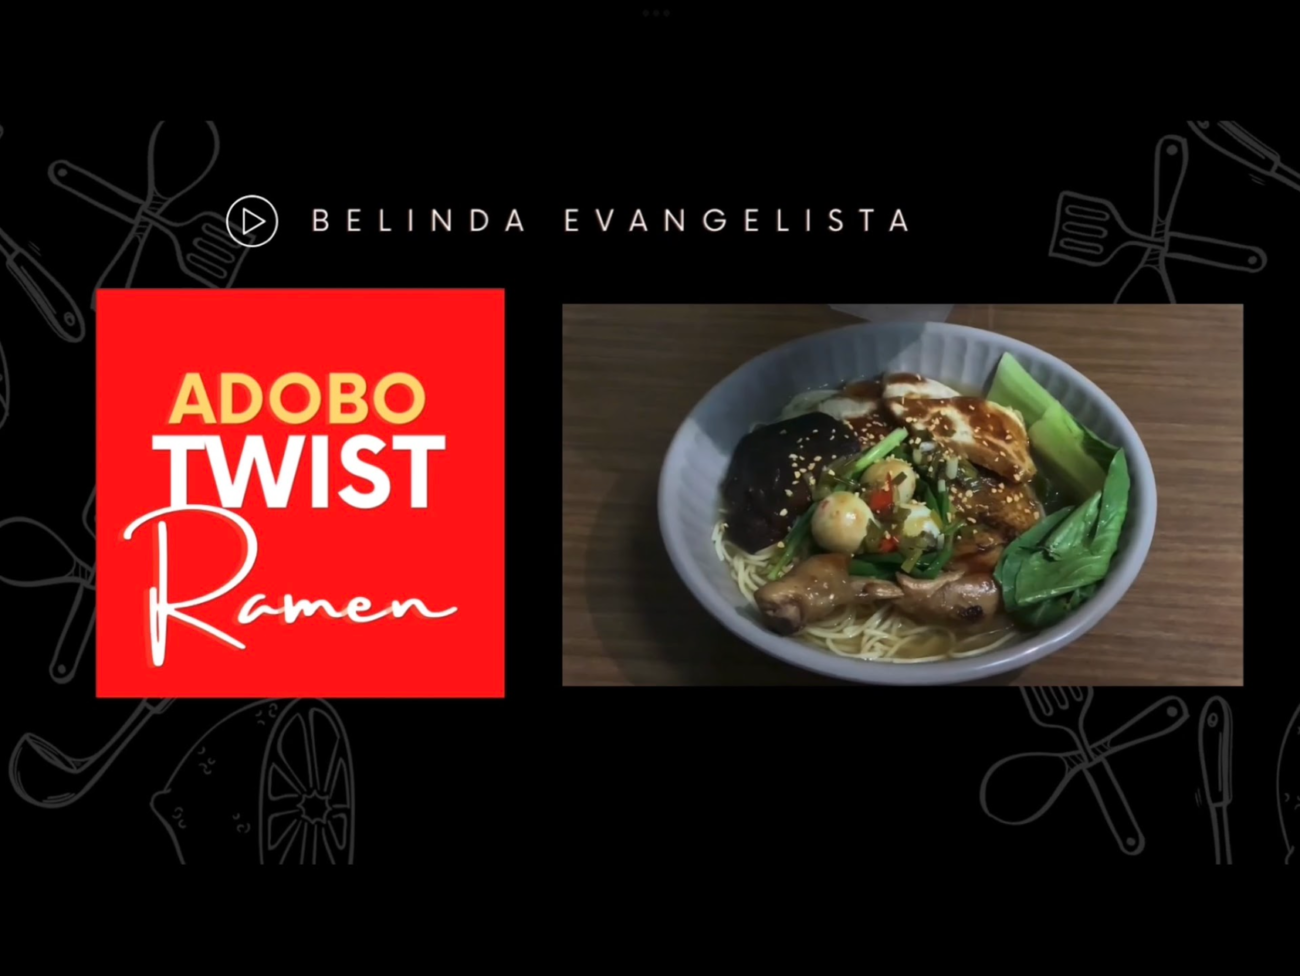 Adobo Twist Ramen by Belinda Evangelista